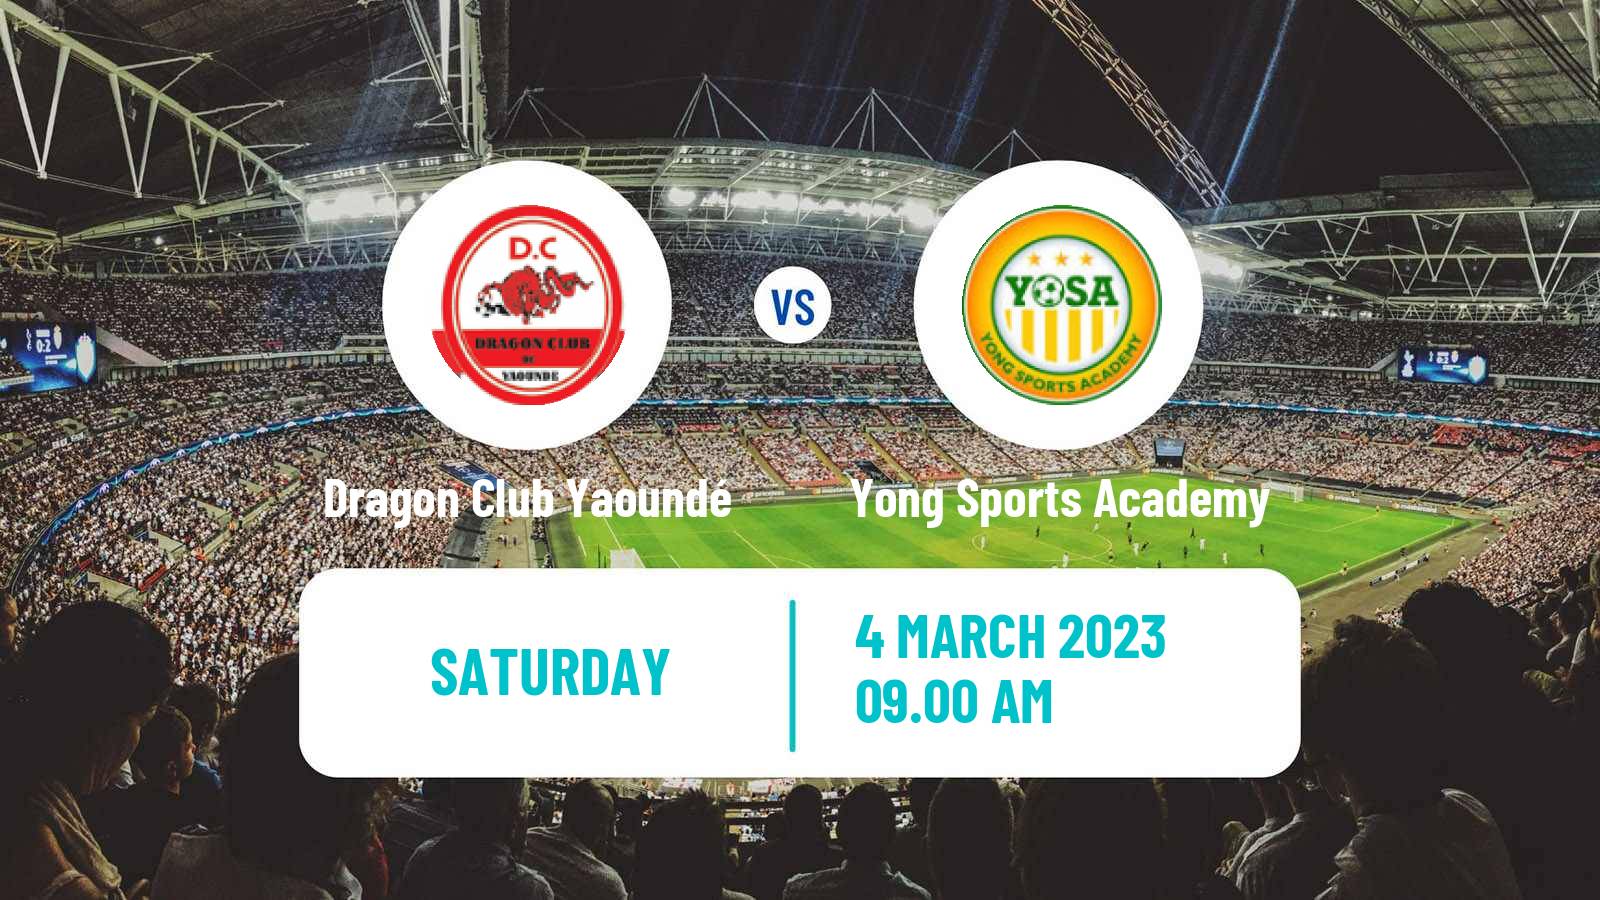 Soccer Cameroon Elite One Dragon Club Yaoundé - Yong Sports Academy